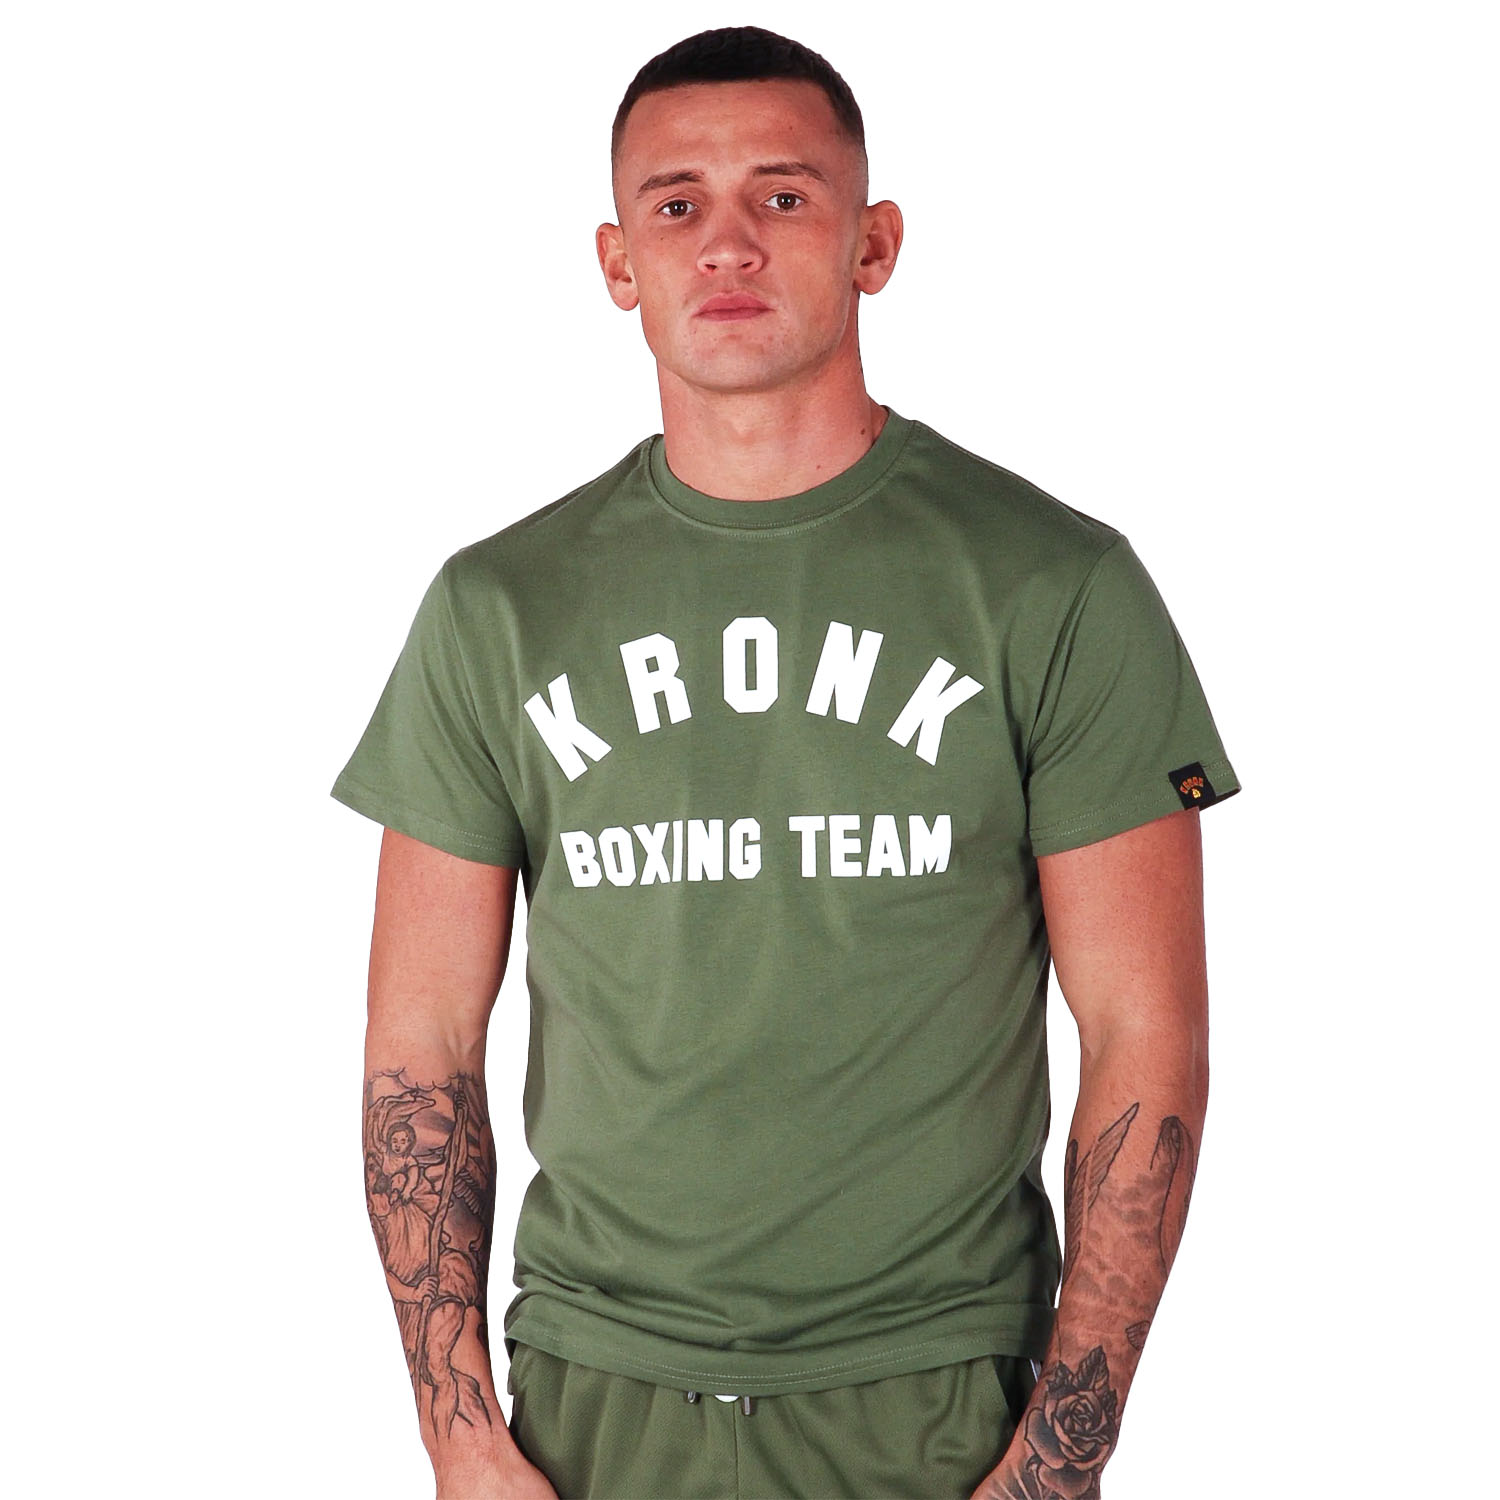 KRONK T-Shirt, Boxing Team, grün, S